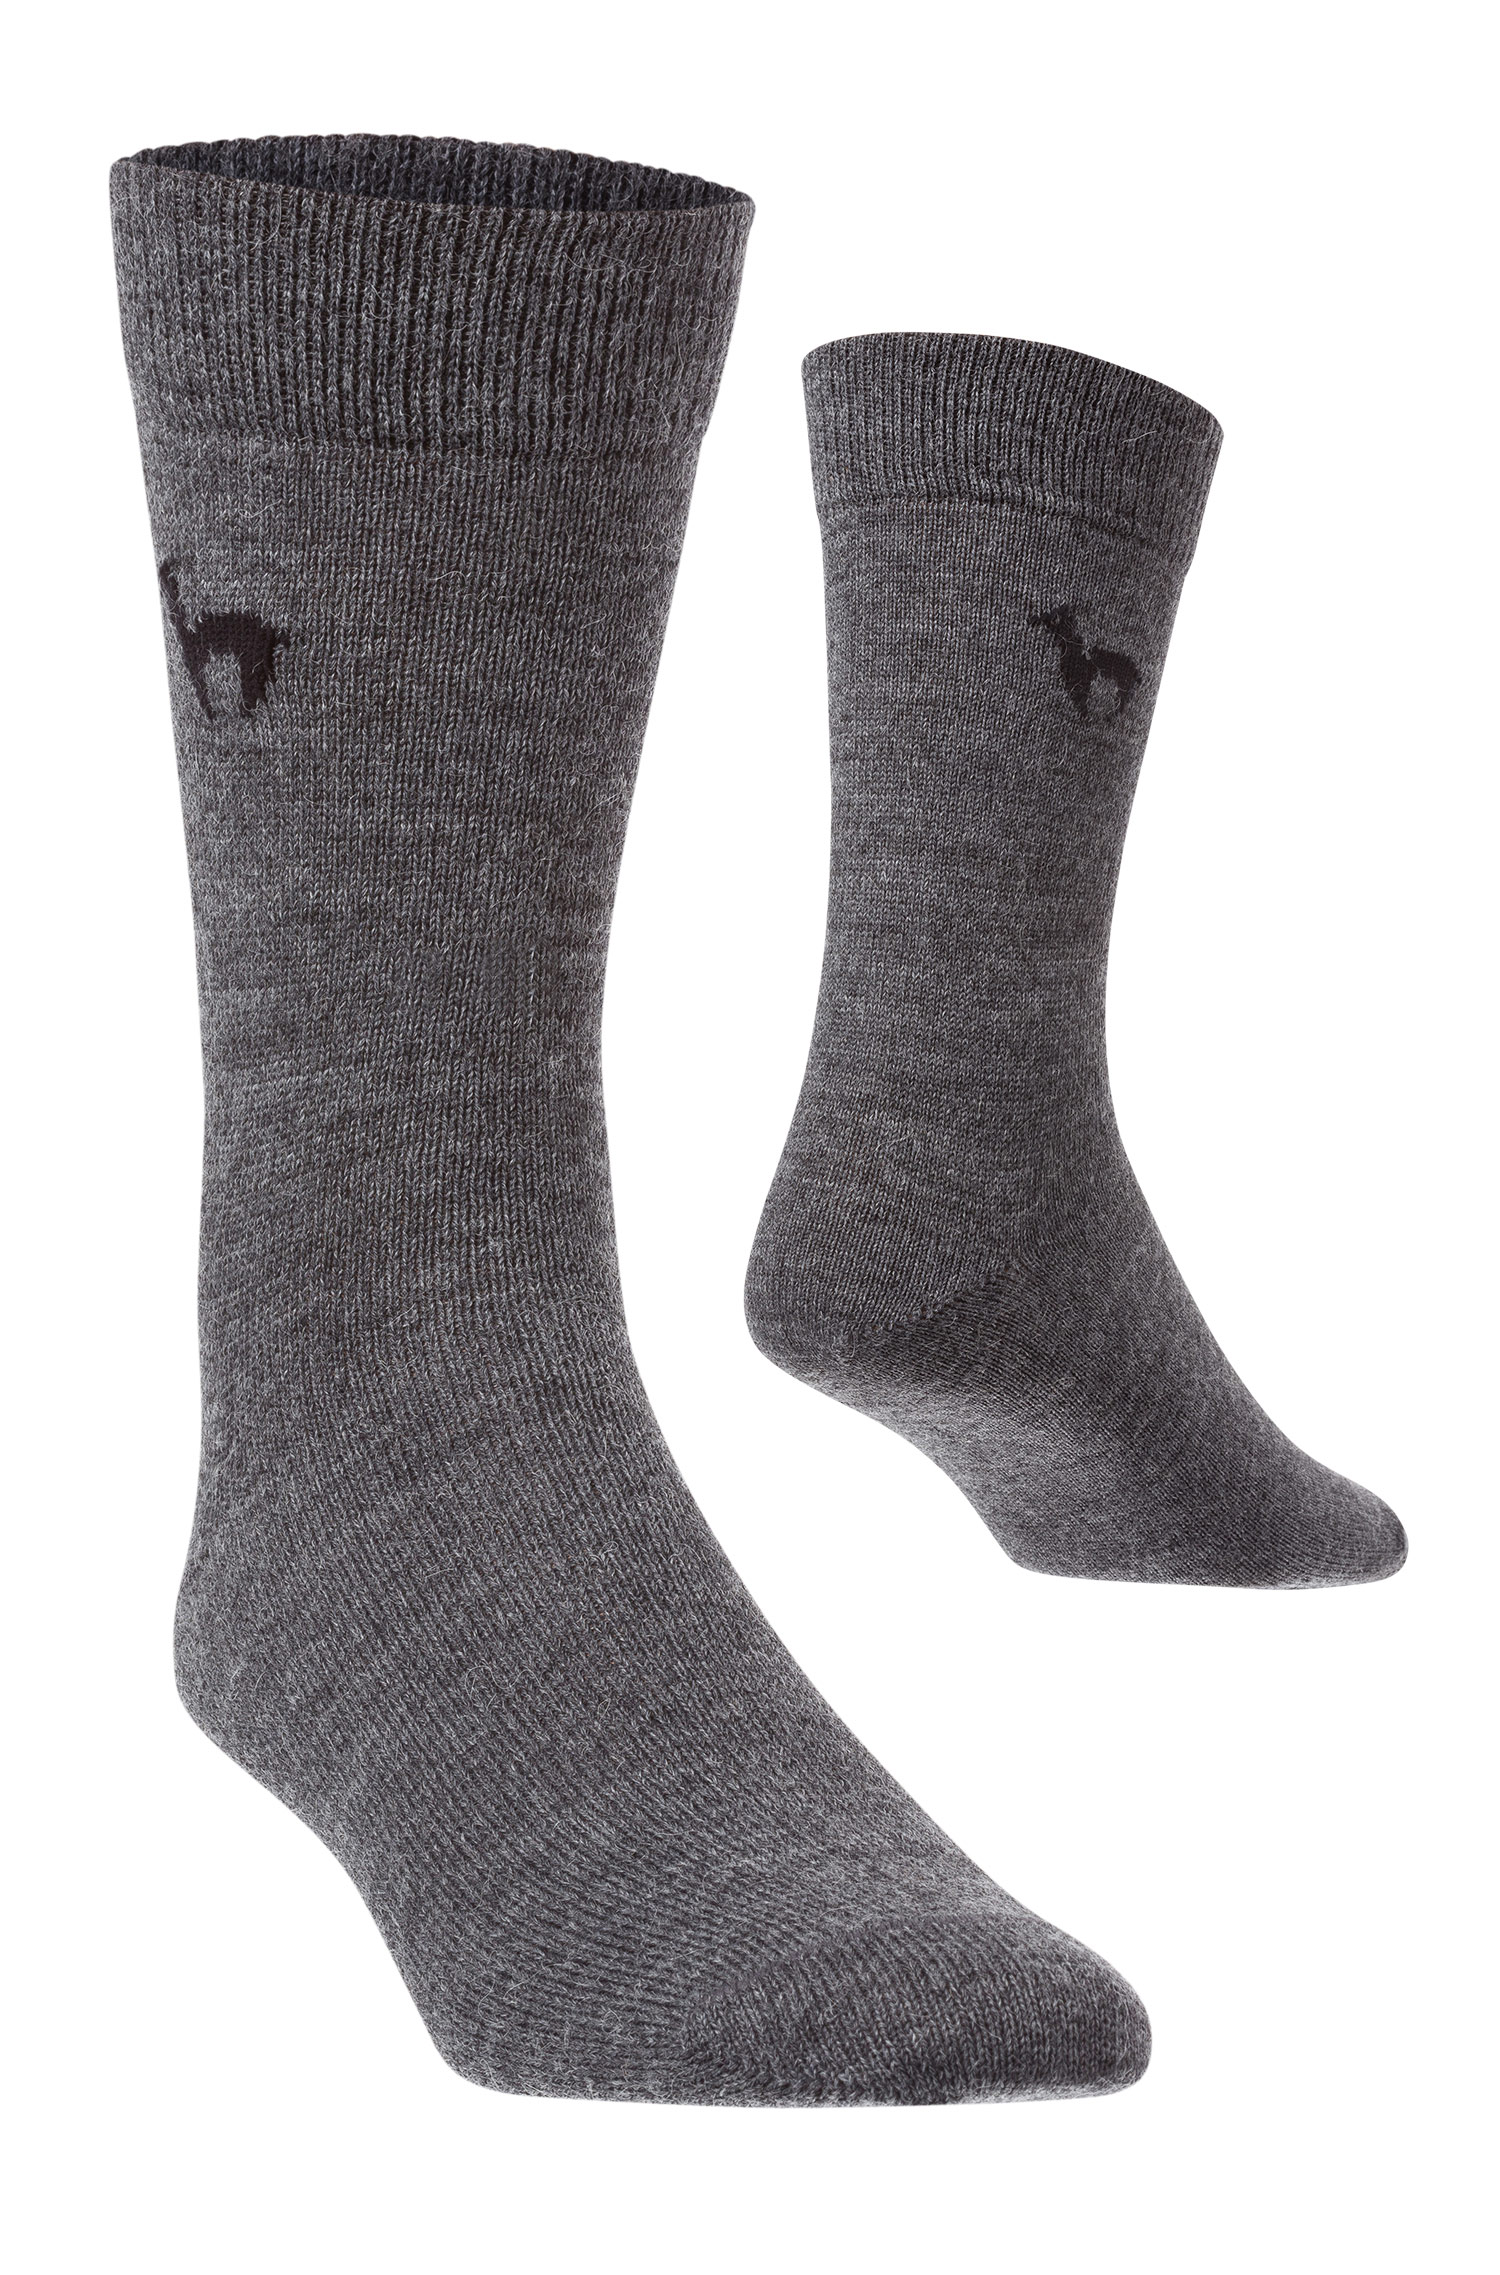 Alpaka Business Socken in grauer Farbe